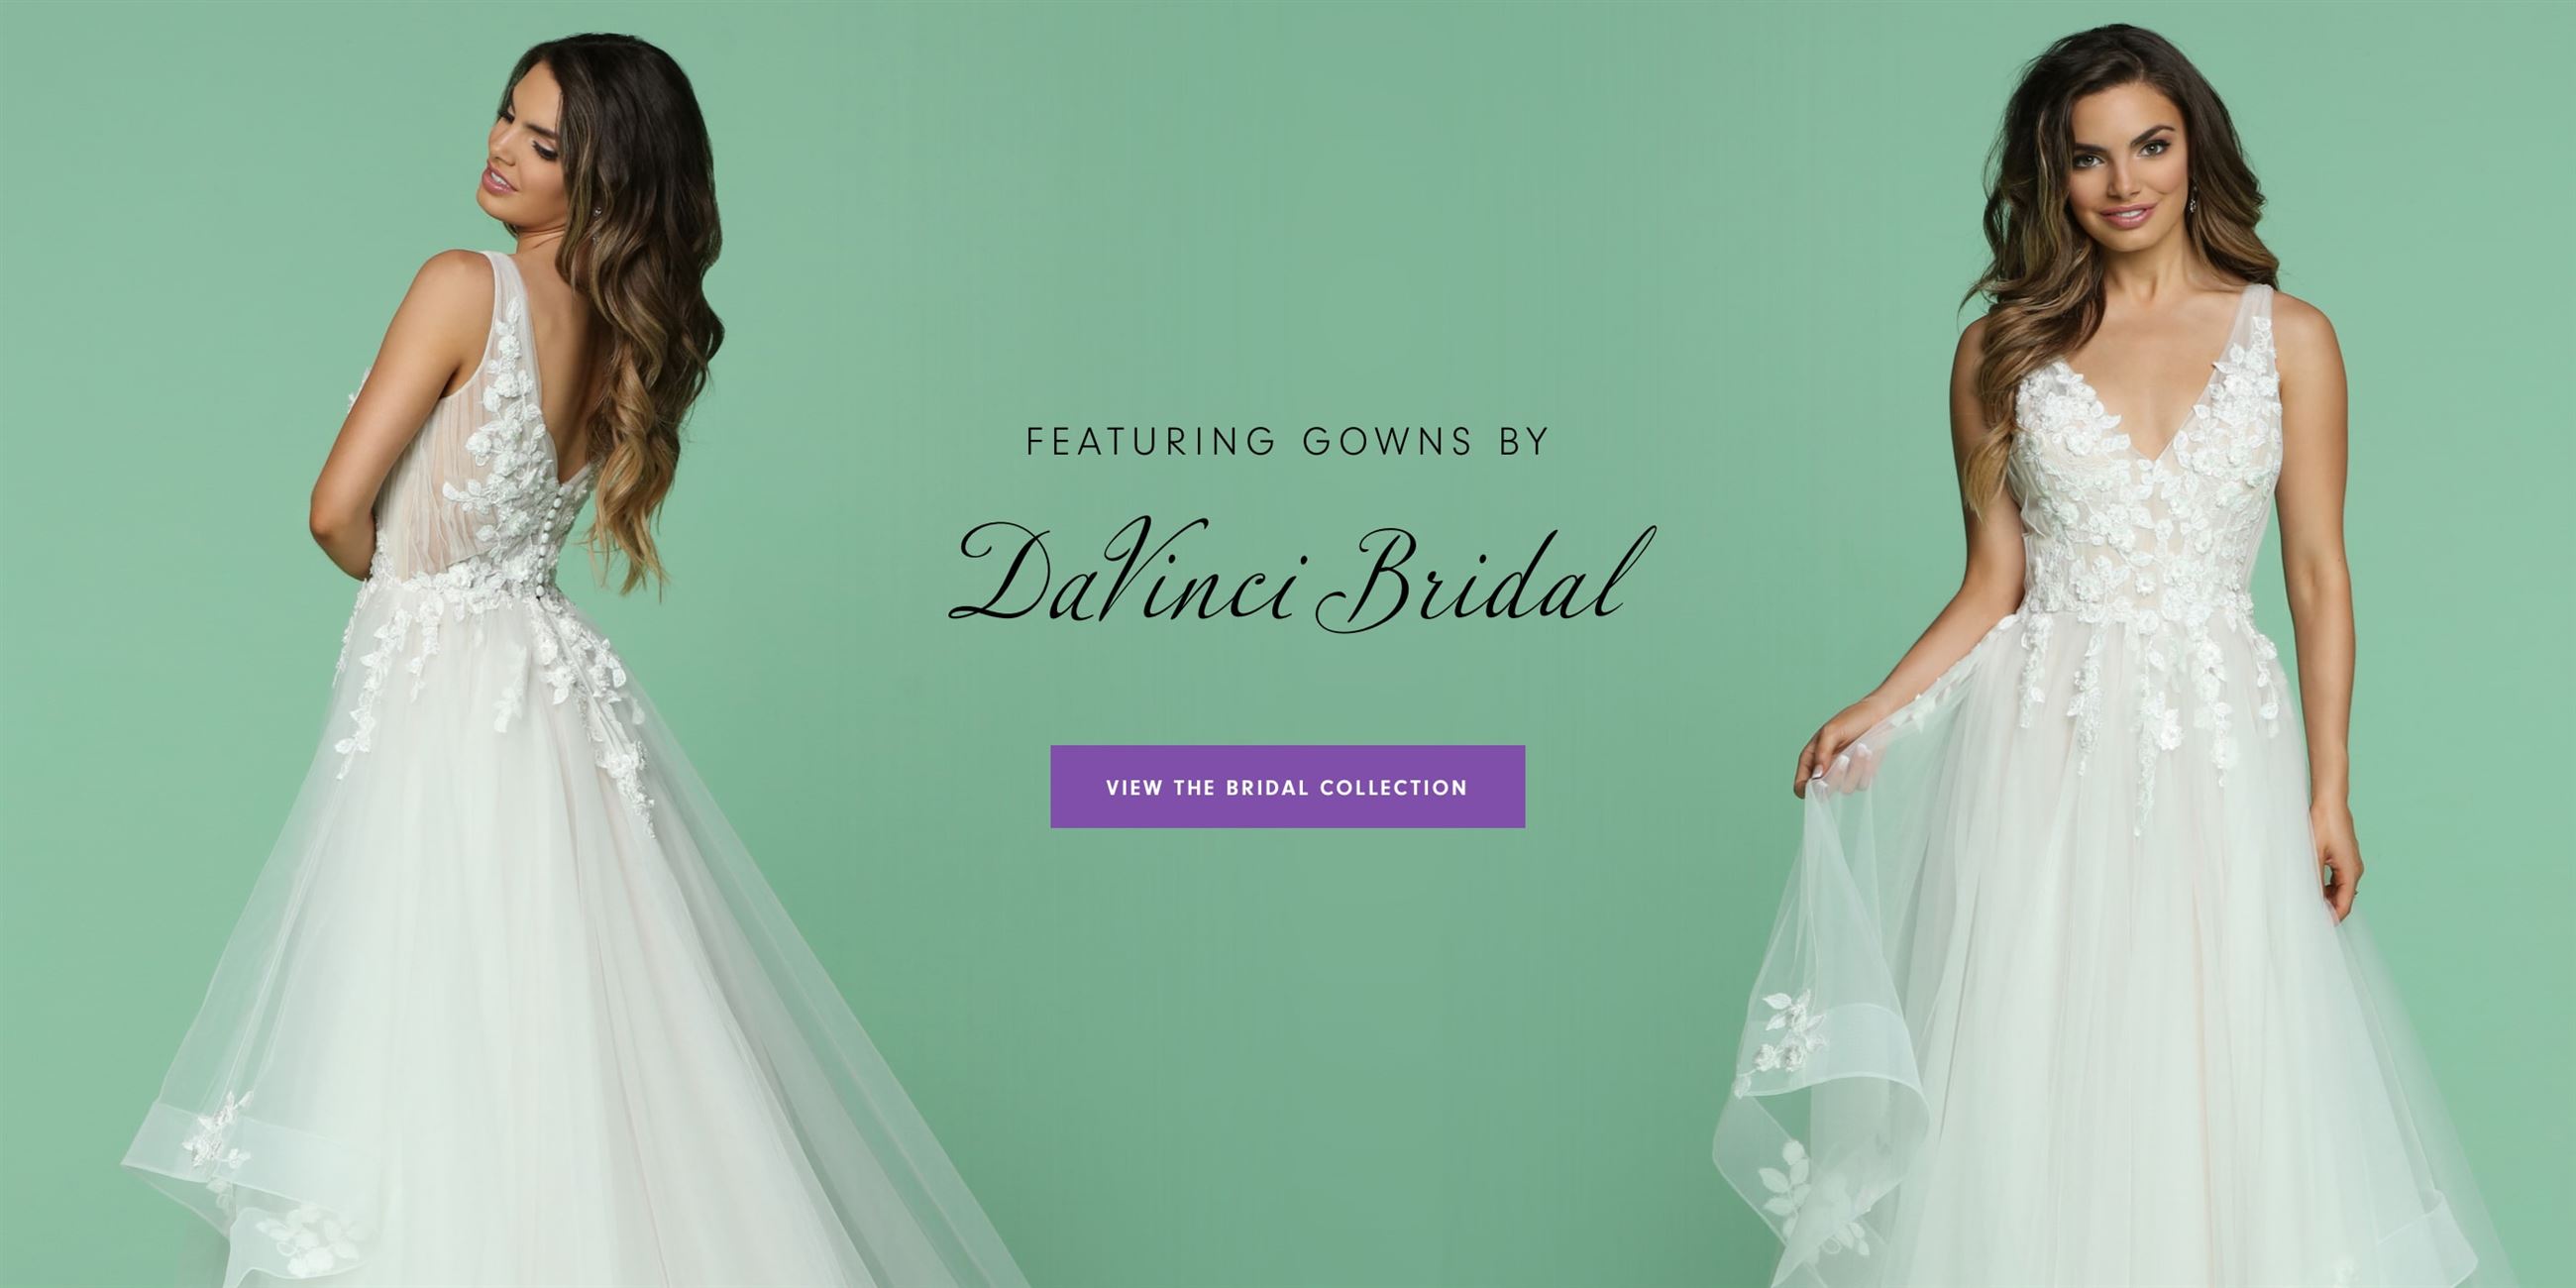 Model wearing a DaVinci Bridal wedding dress